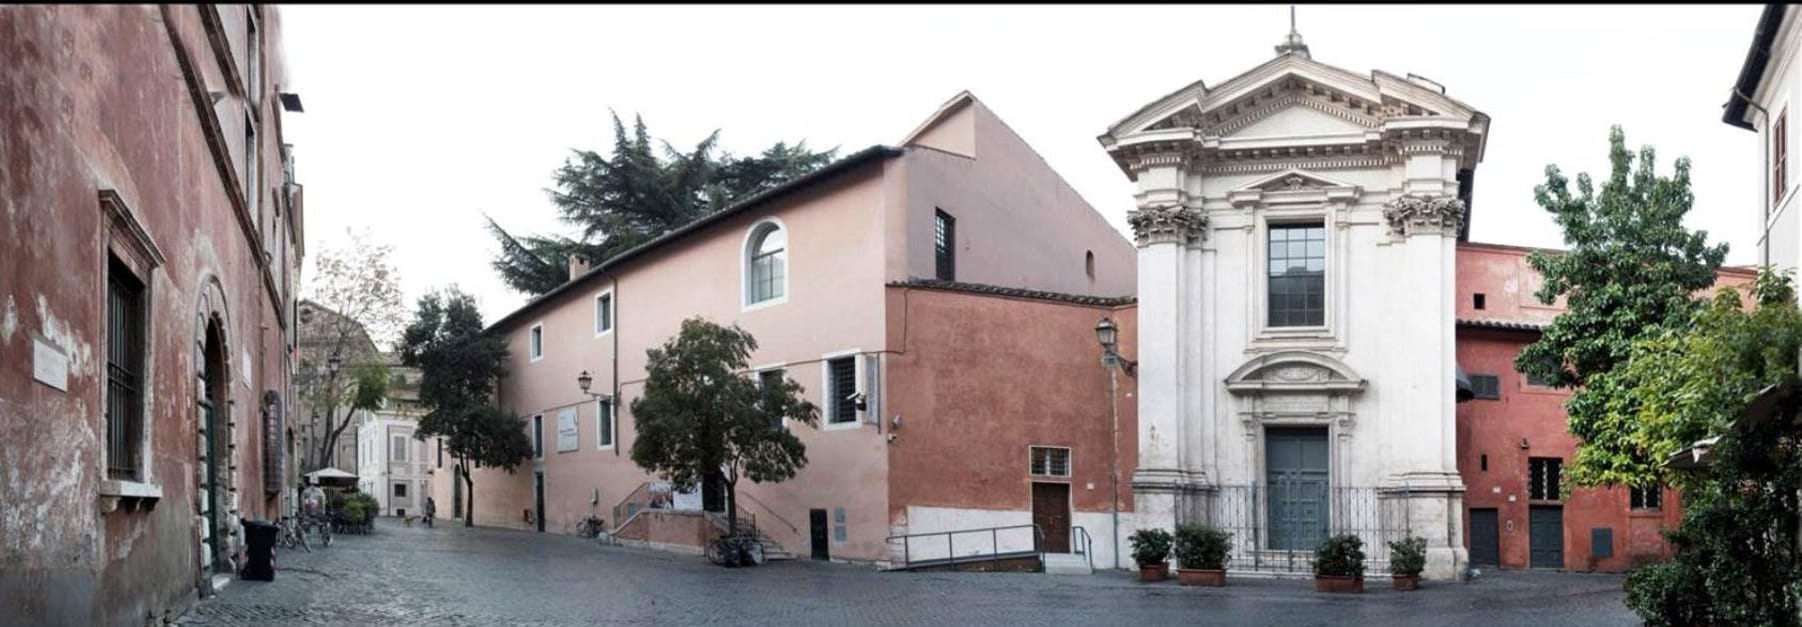 Malerisches Fleckchen in Trastevere: die Piazza Sant'Egidio. "Per gentile concessione Sovrintendenza Capitolina ai Beni Culturali."